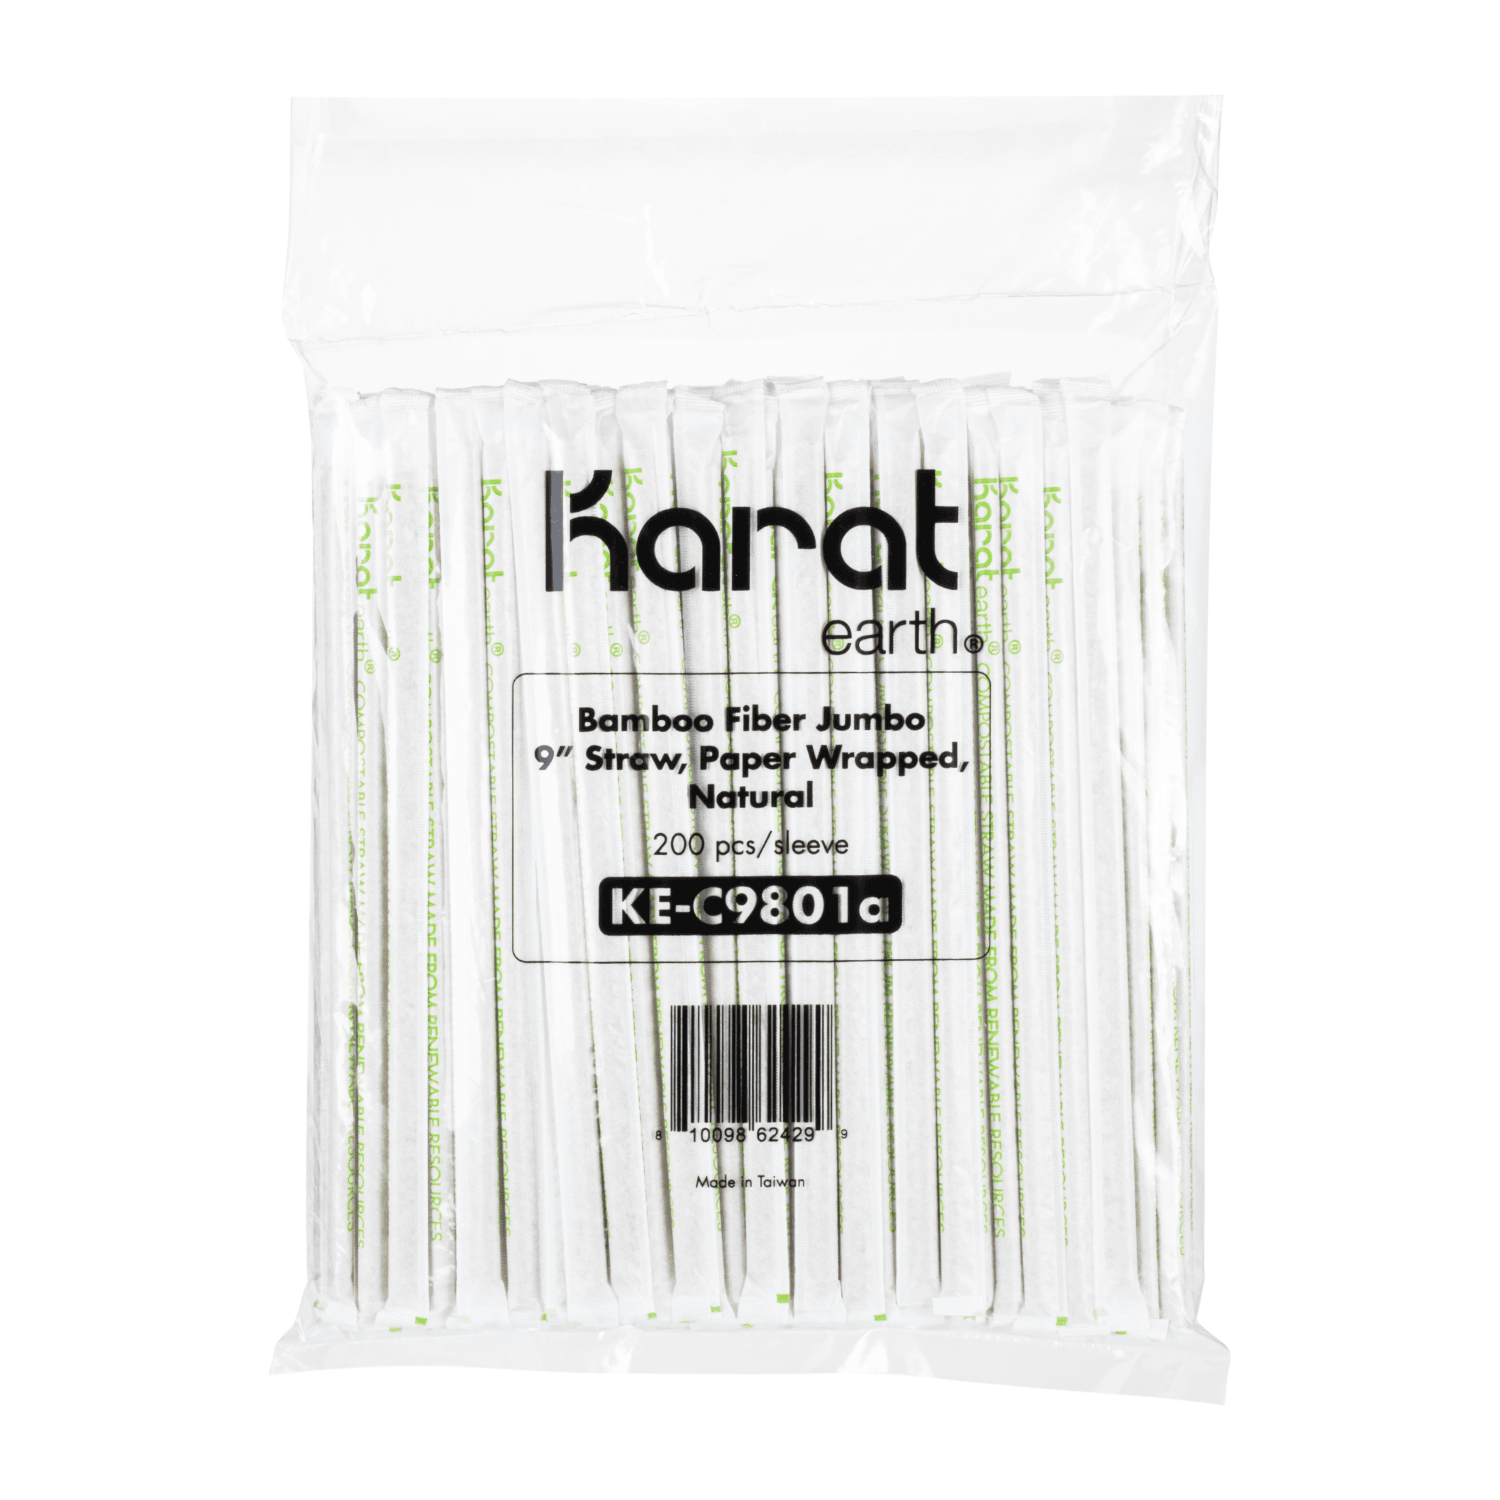 Karat Earth Flat Cut Bamboo Fiber Jumbo 9” Straw in packaging